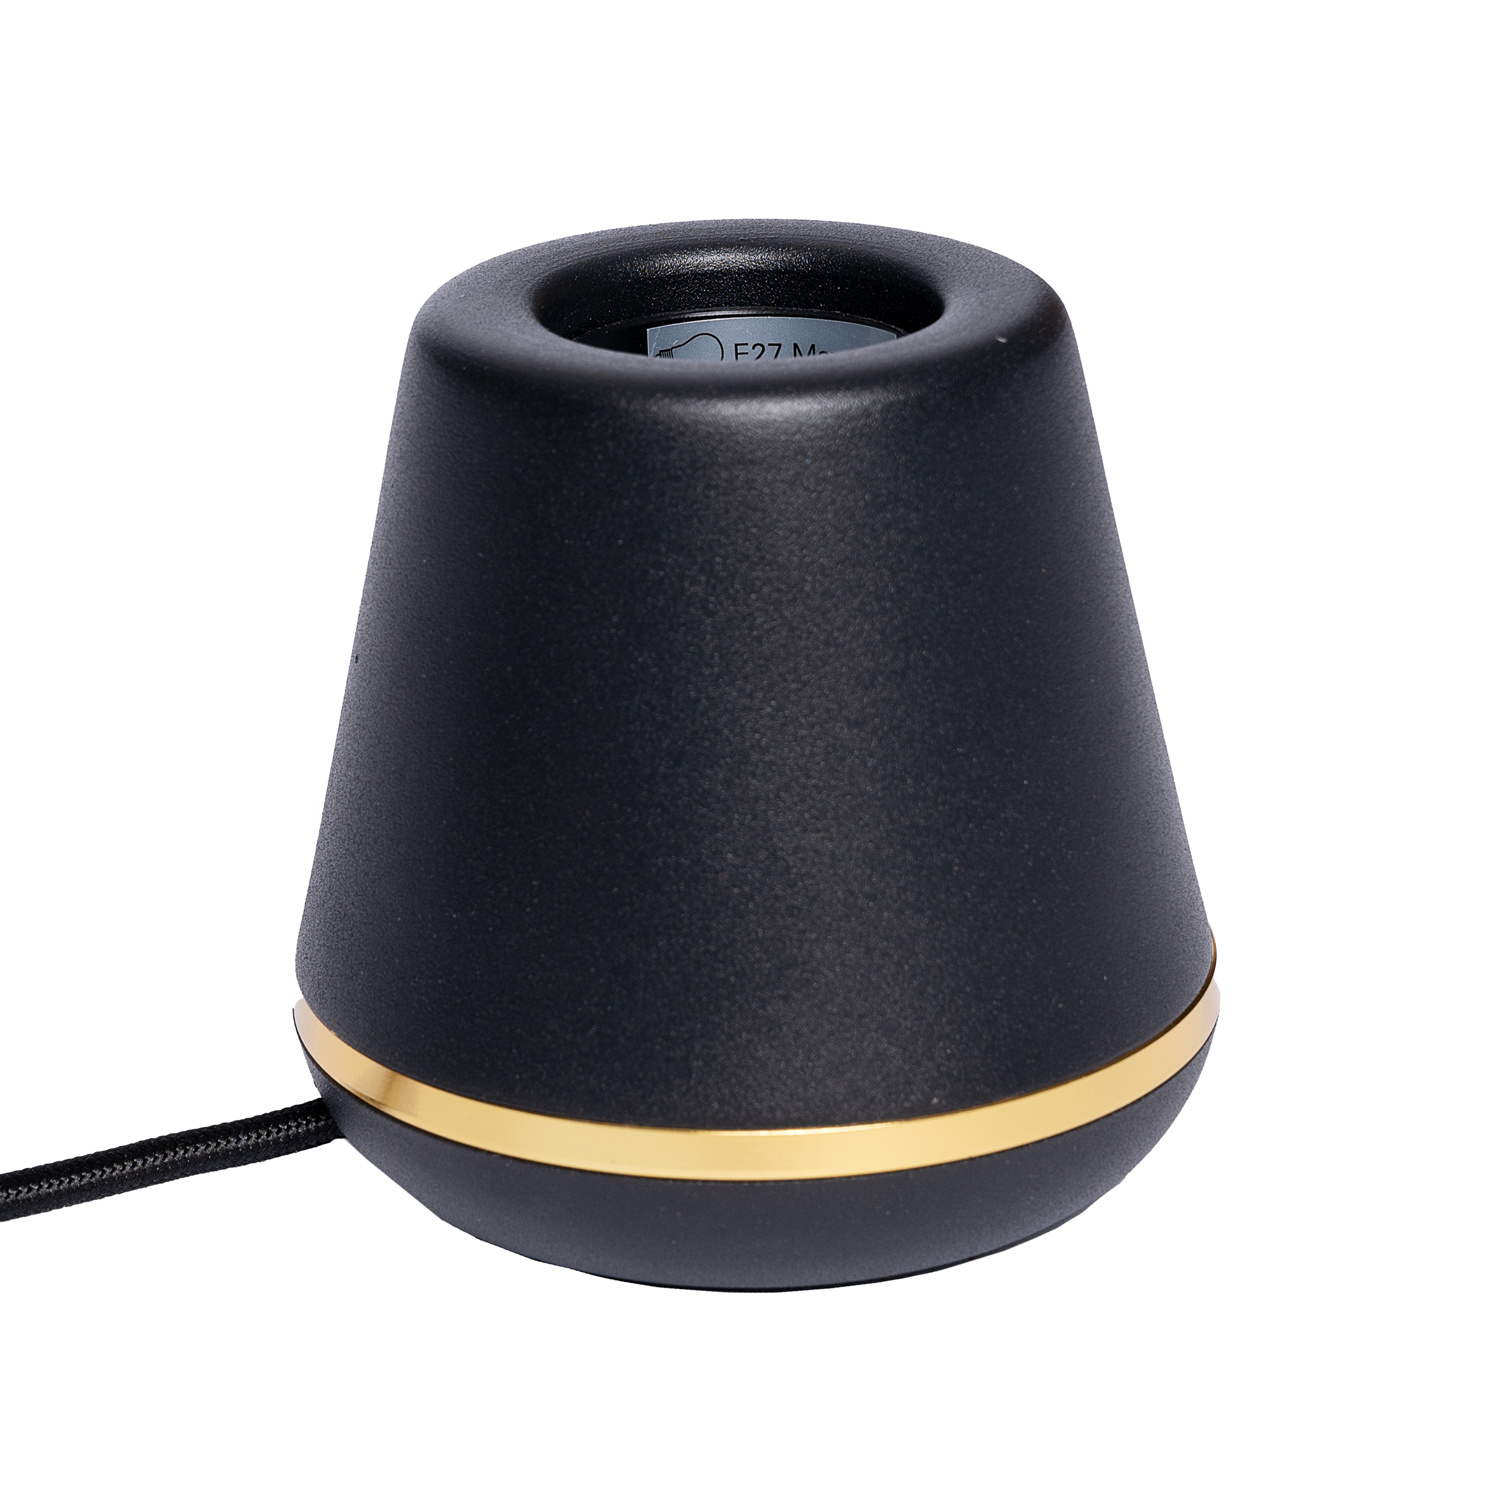 Design Tafellamp Zwart - Gouden Ring - E27 fitting met 1,5 meter stekker schakelaar - LedlampshopXL